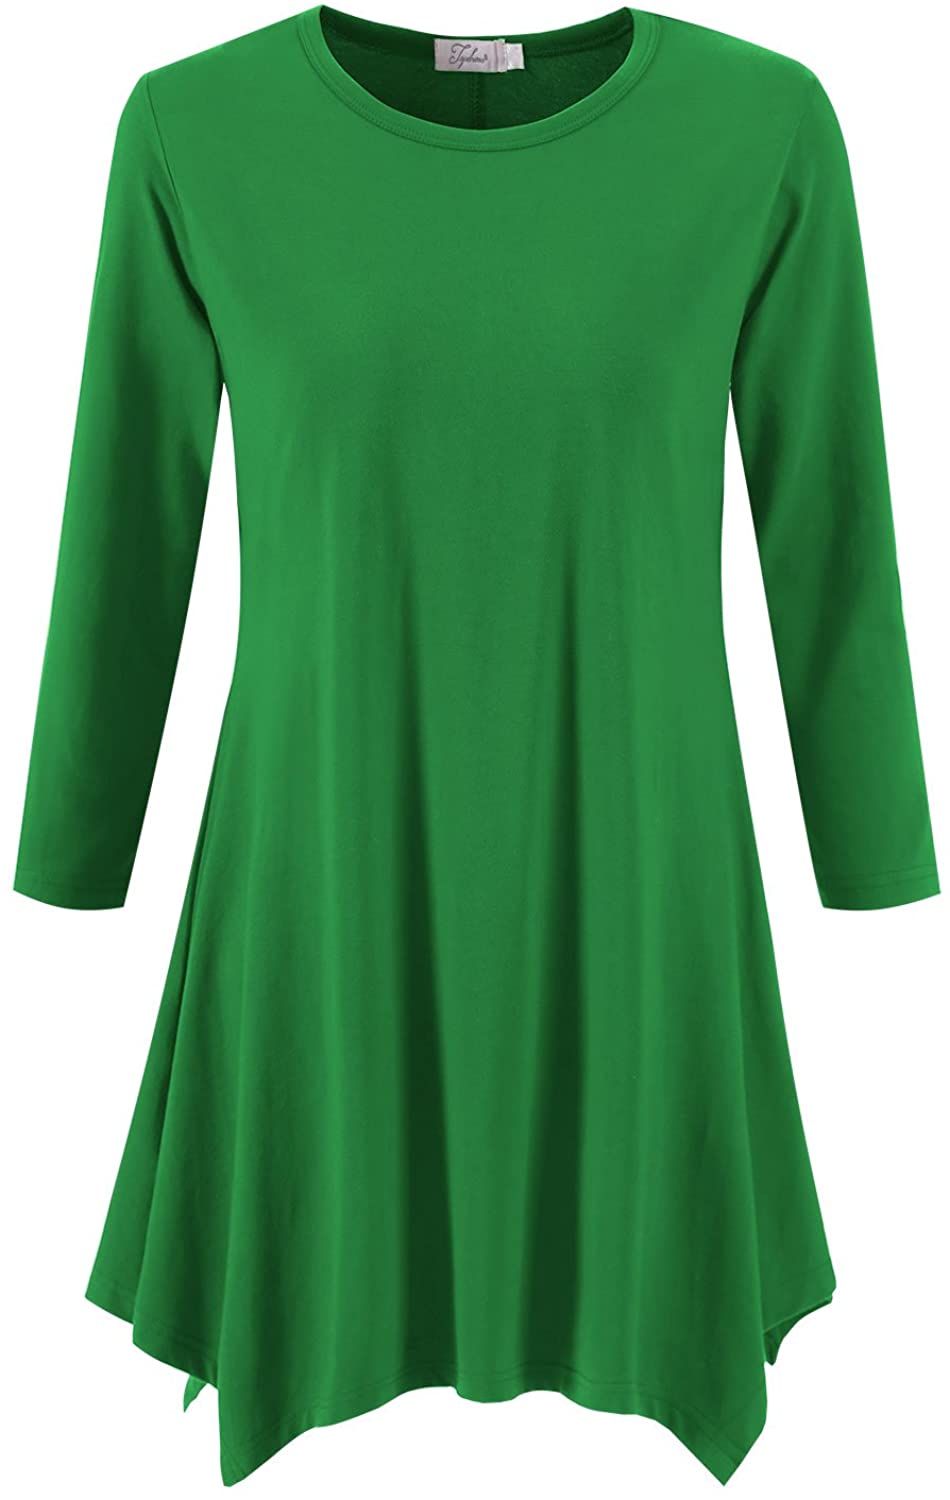 Topdress Women's Swing Tunic Tops 3/4 Sleeve Loose T-Shirt Dress